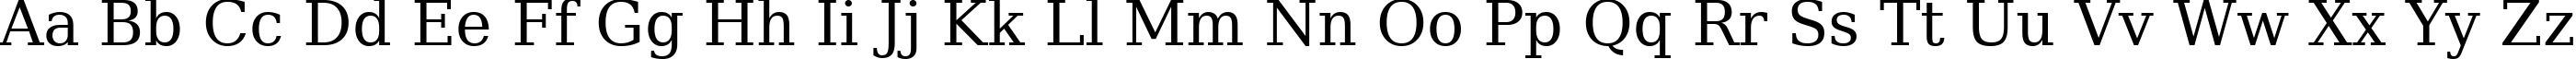 Пример написания английского алфавита шрифтом ae_Arab